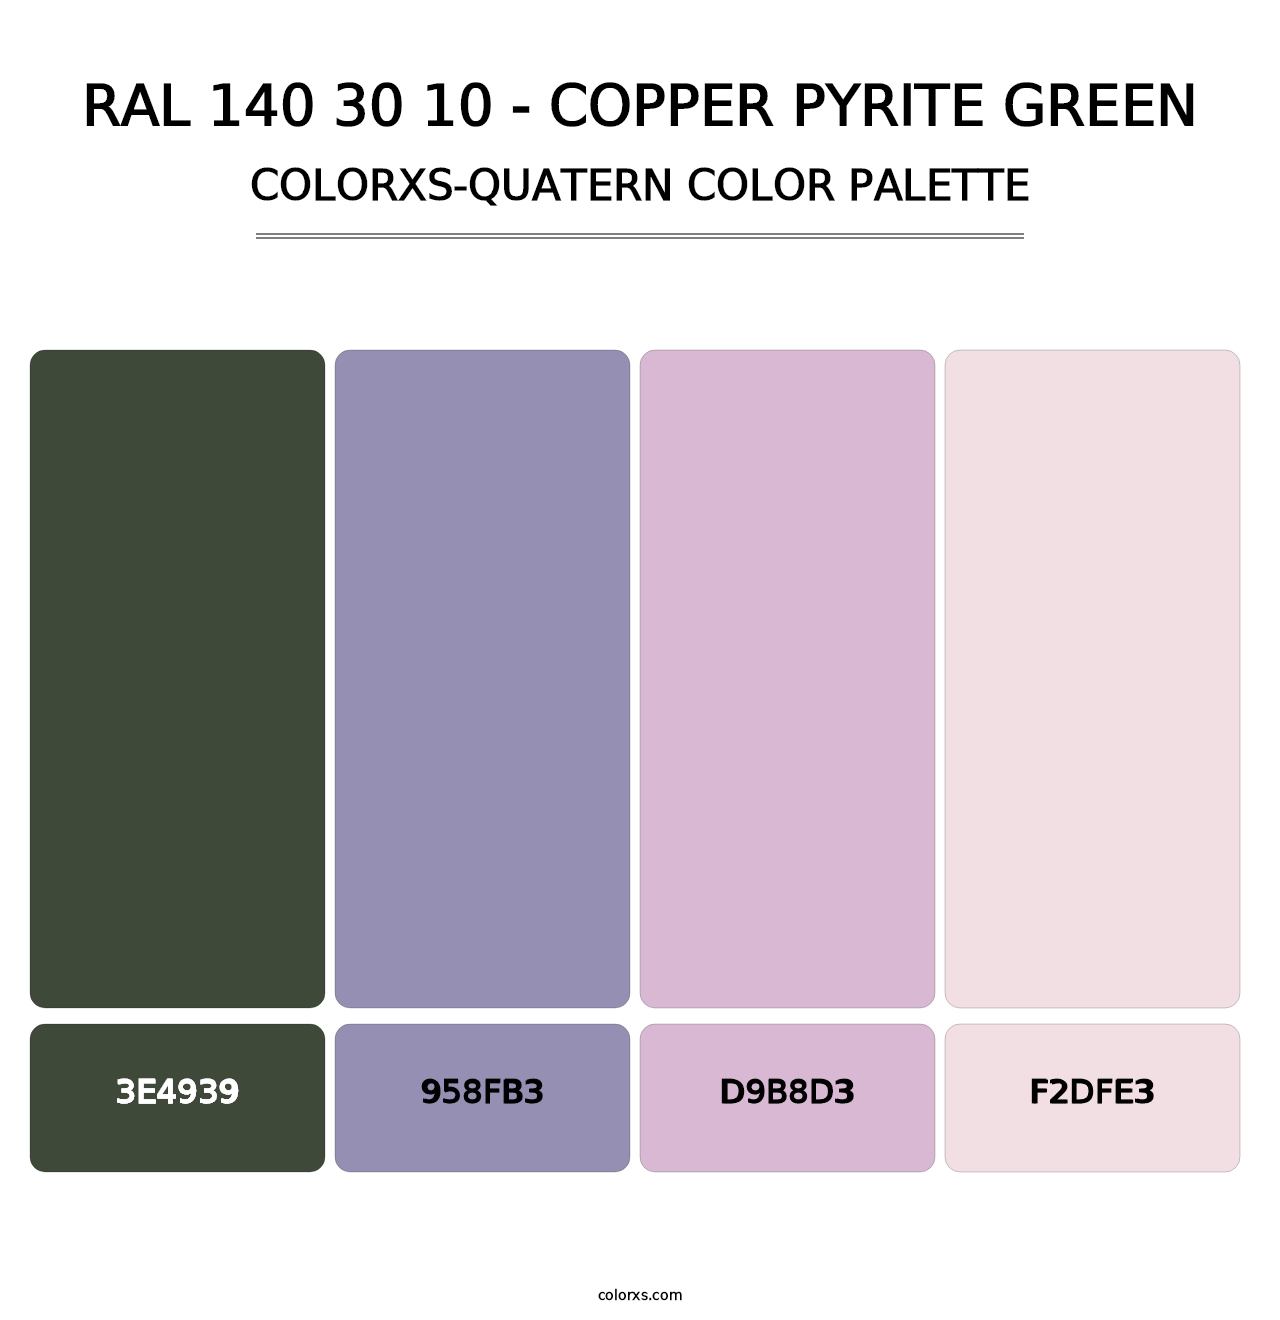 RAL 140 30 10 - Copper Pyrite Green - Colorxs Quatern Palette